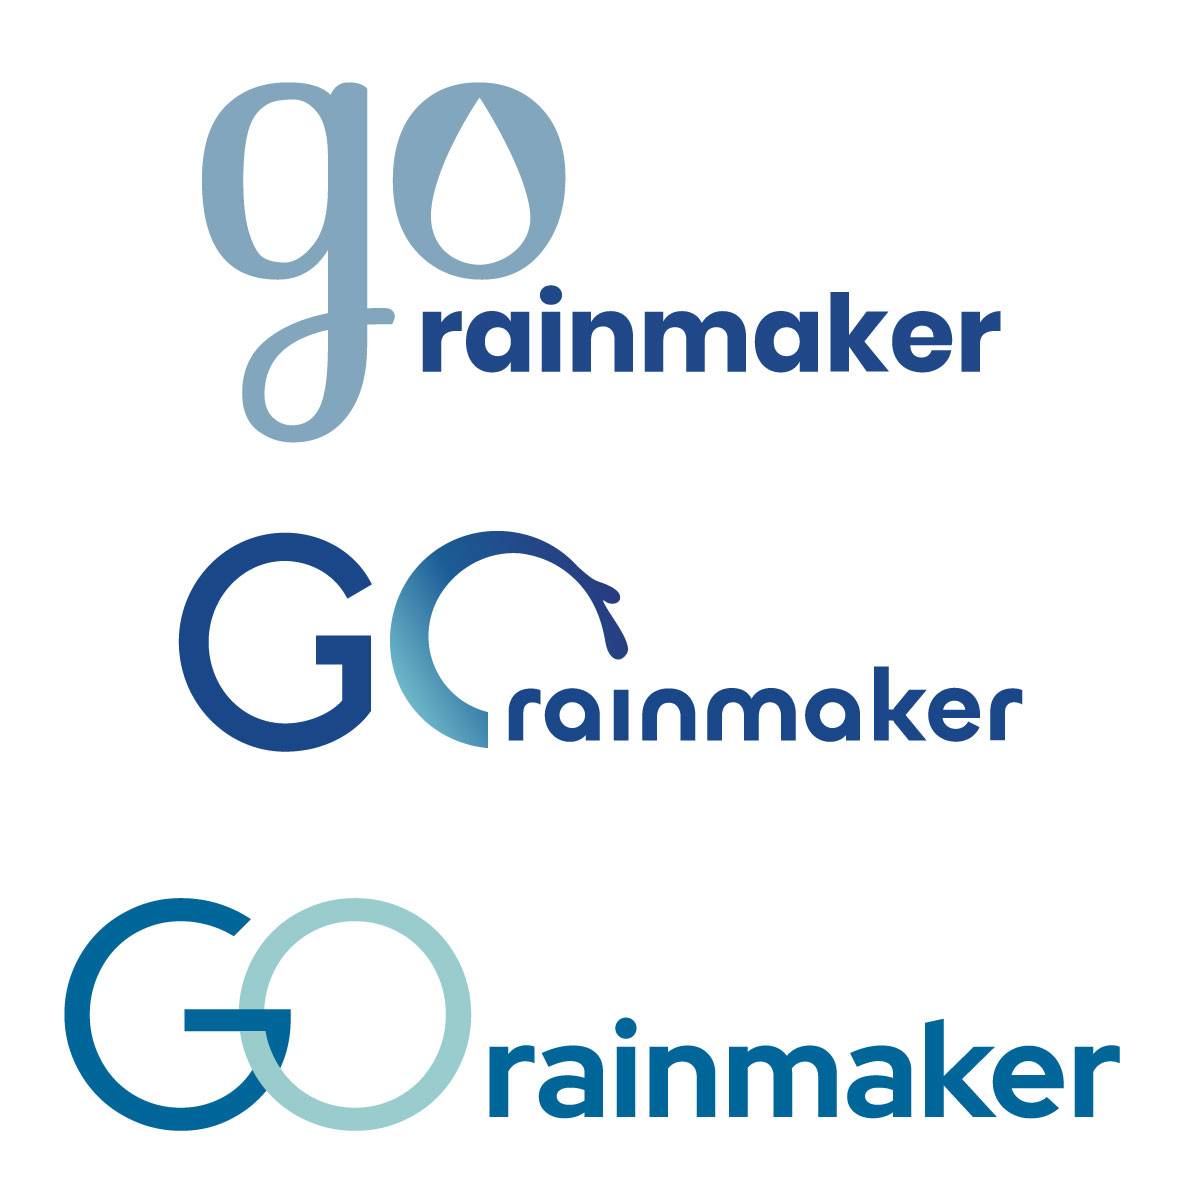 GO Rainmaker Drafts